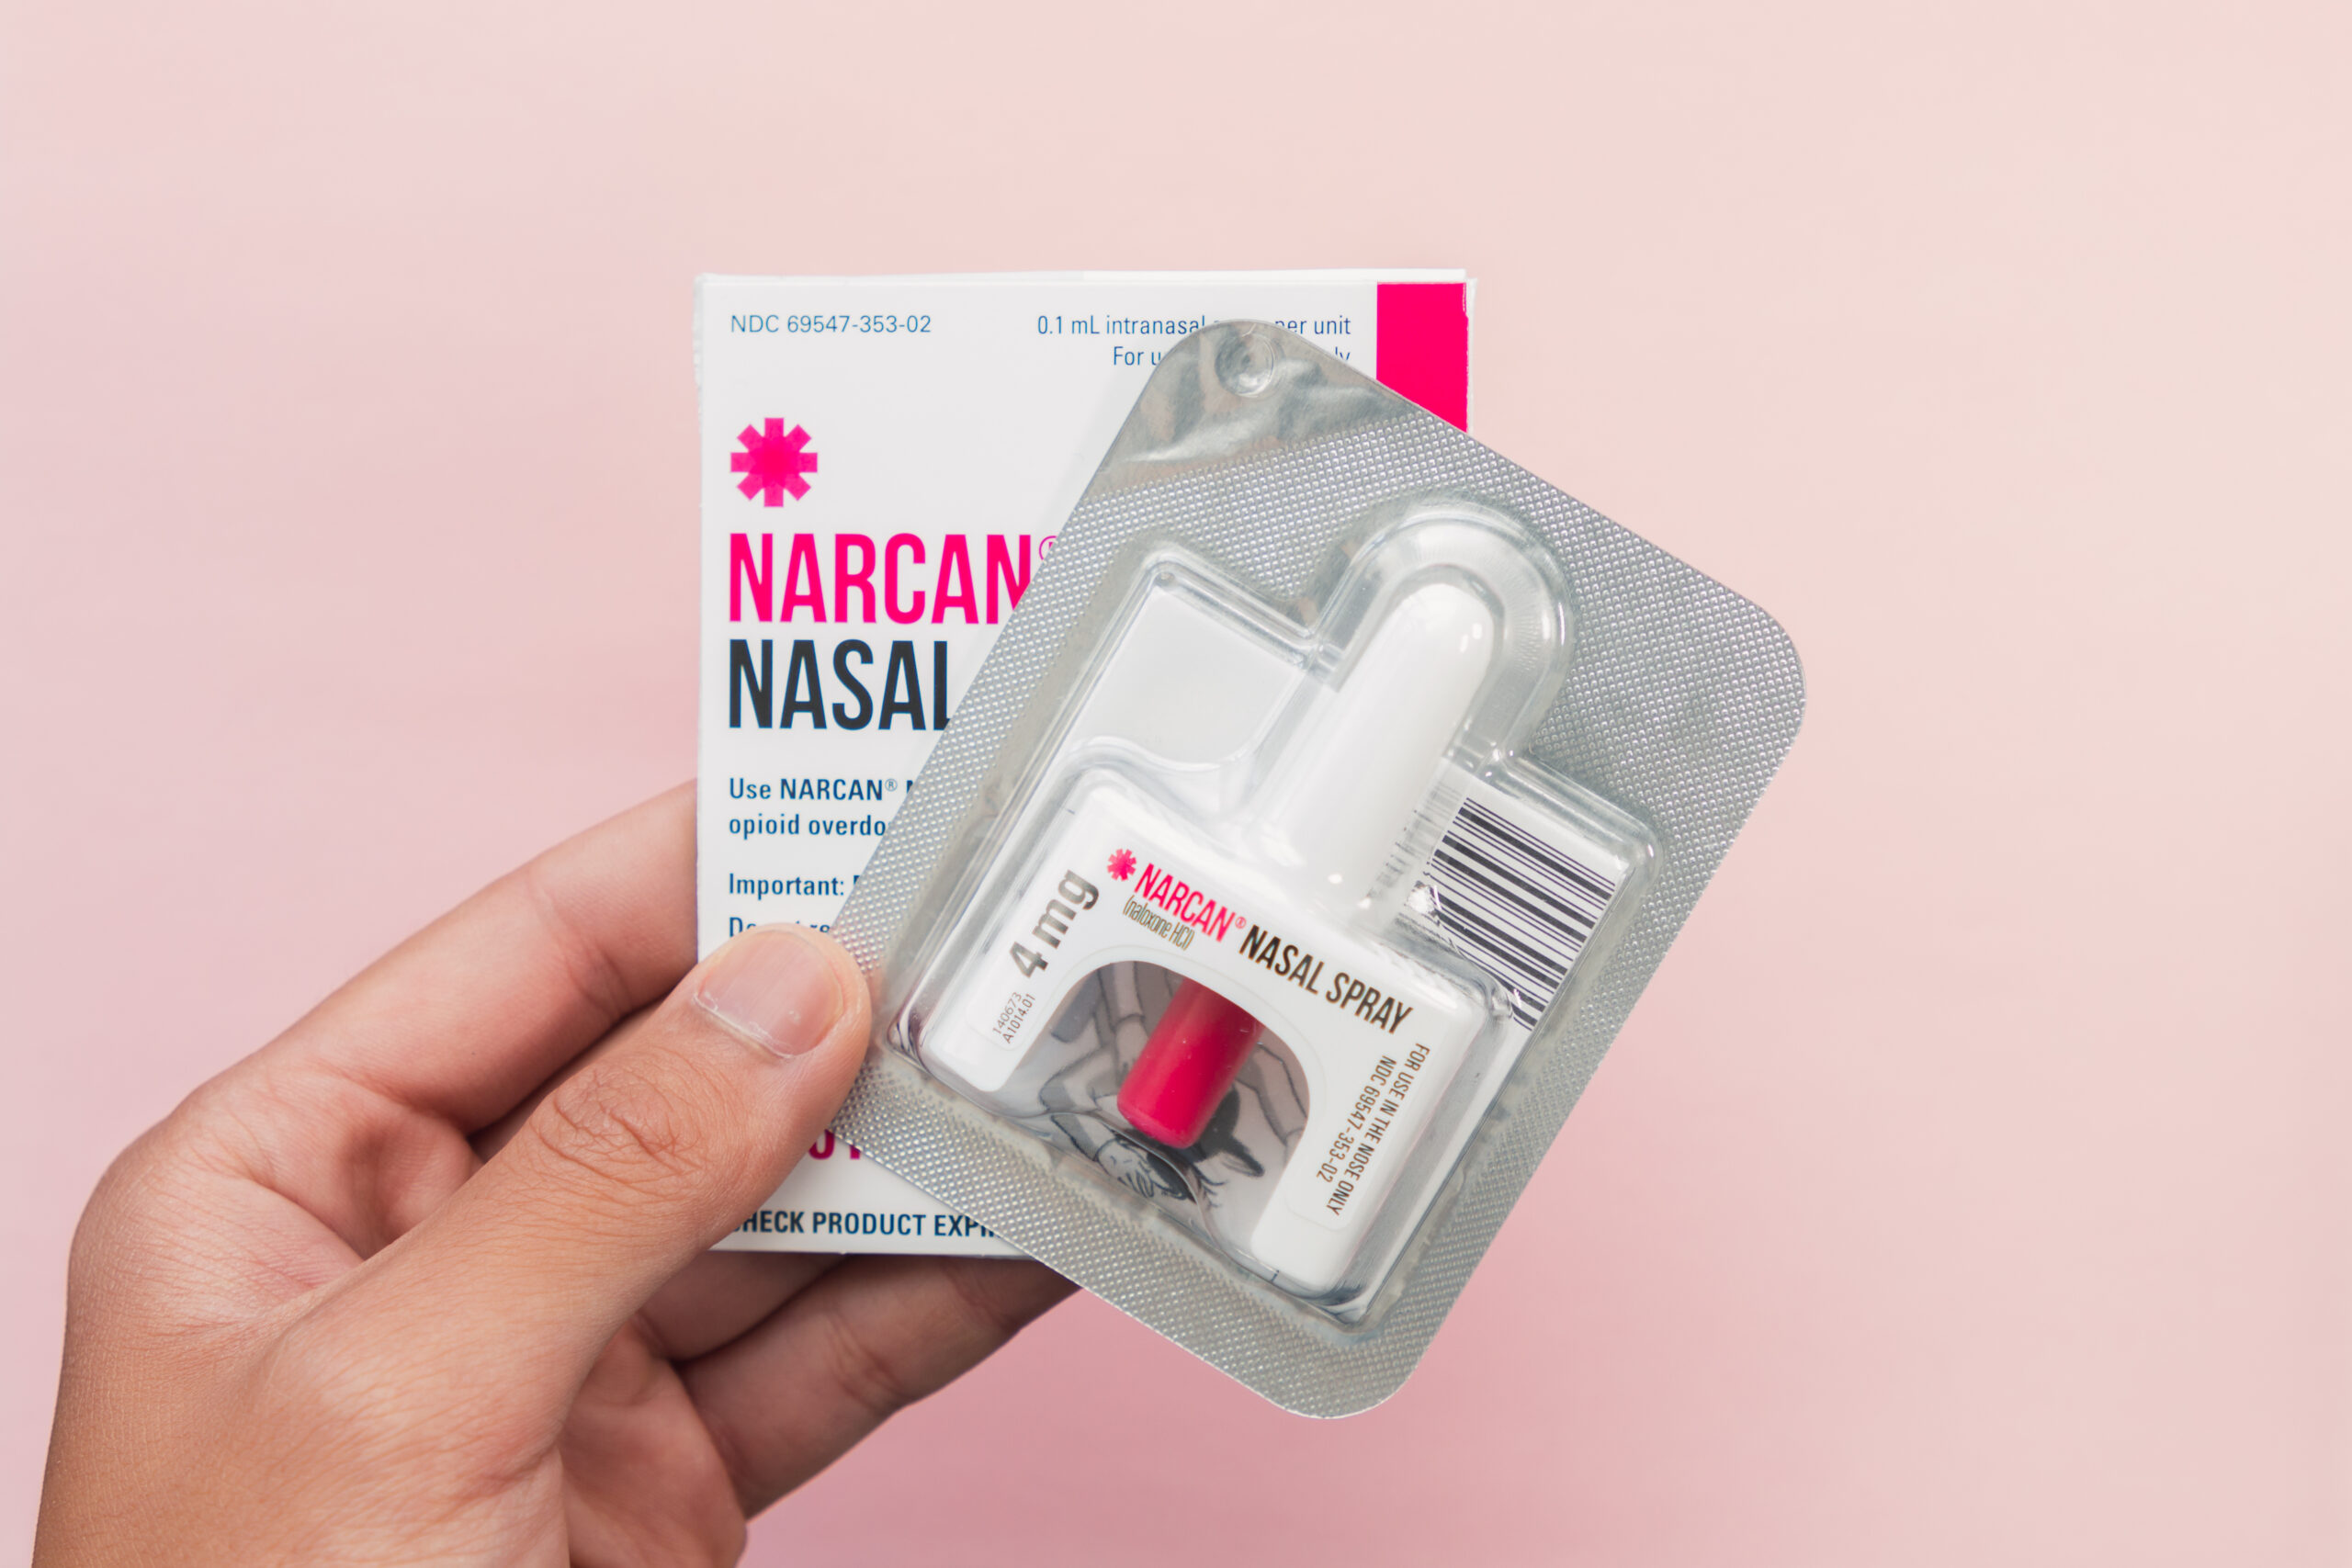 naloxone (Narcan) for opioid overdose